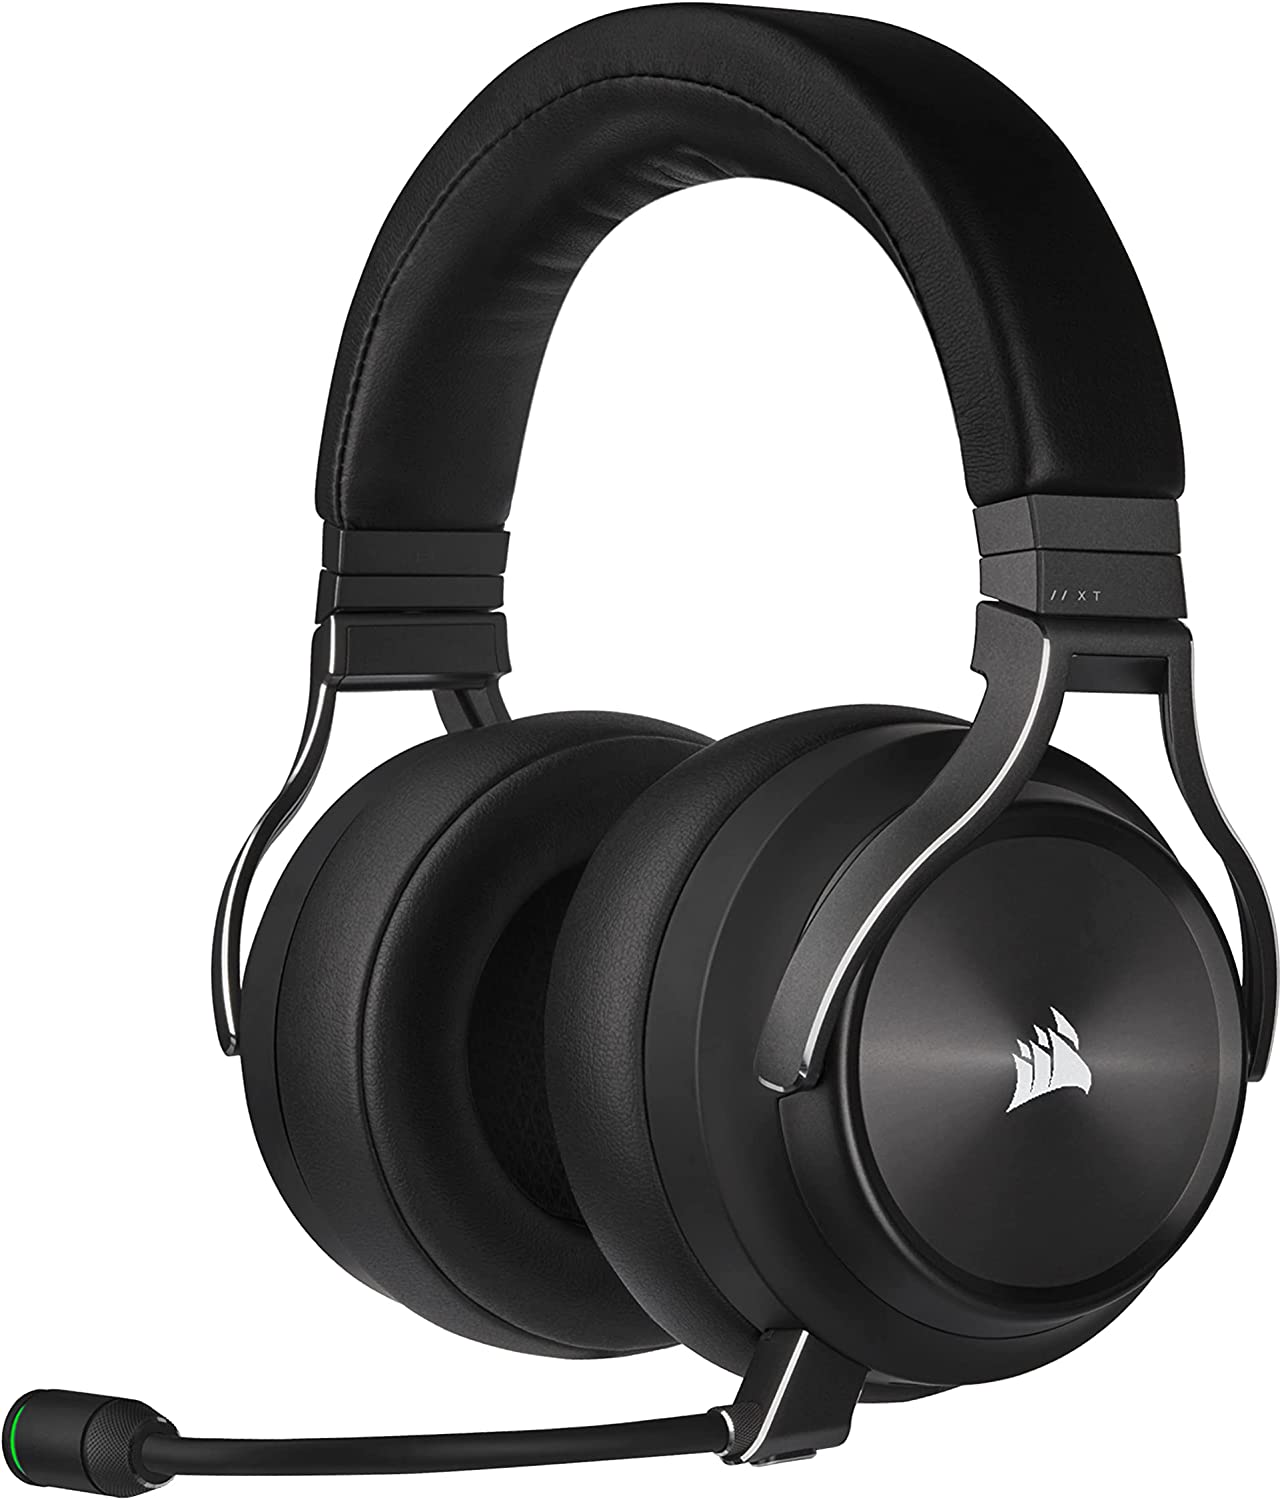 Corsair VIRTUOSO RGB WIRELESS XT High-Fidelity Gaming Headset (Slate) (Refurbished) - $113.39 + FS